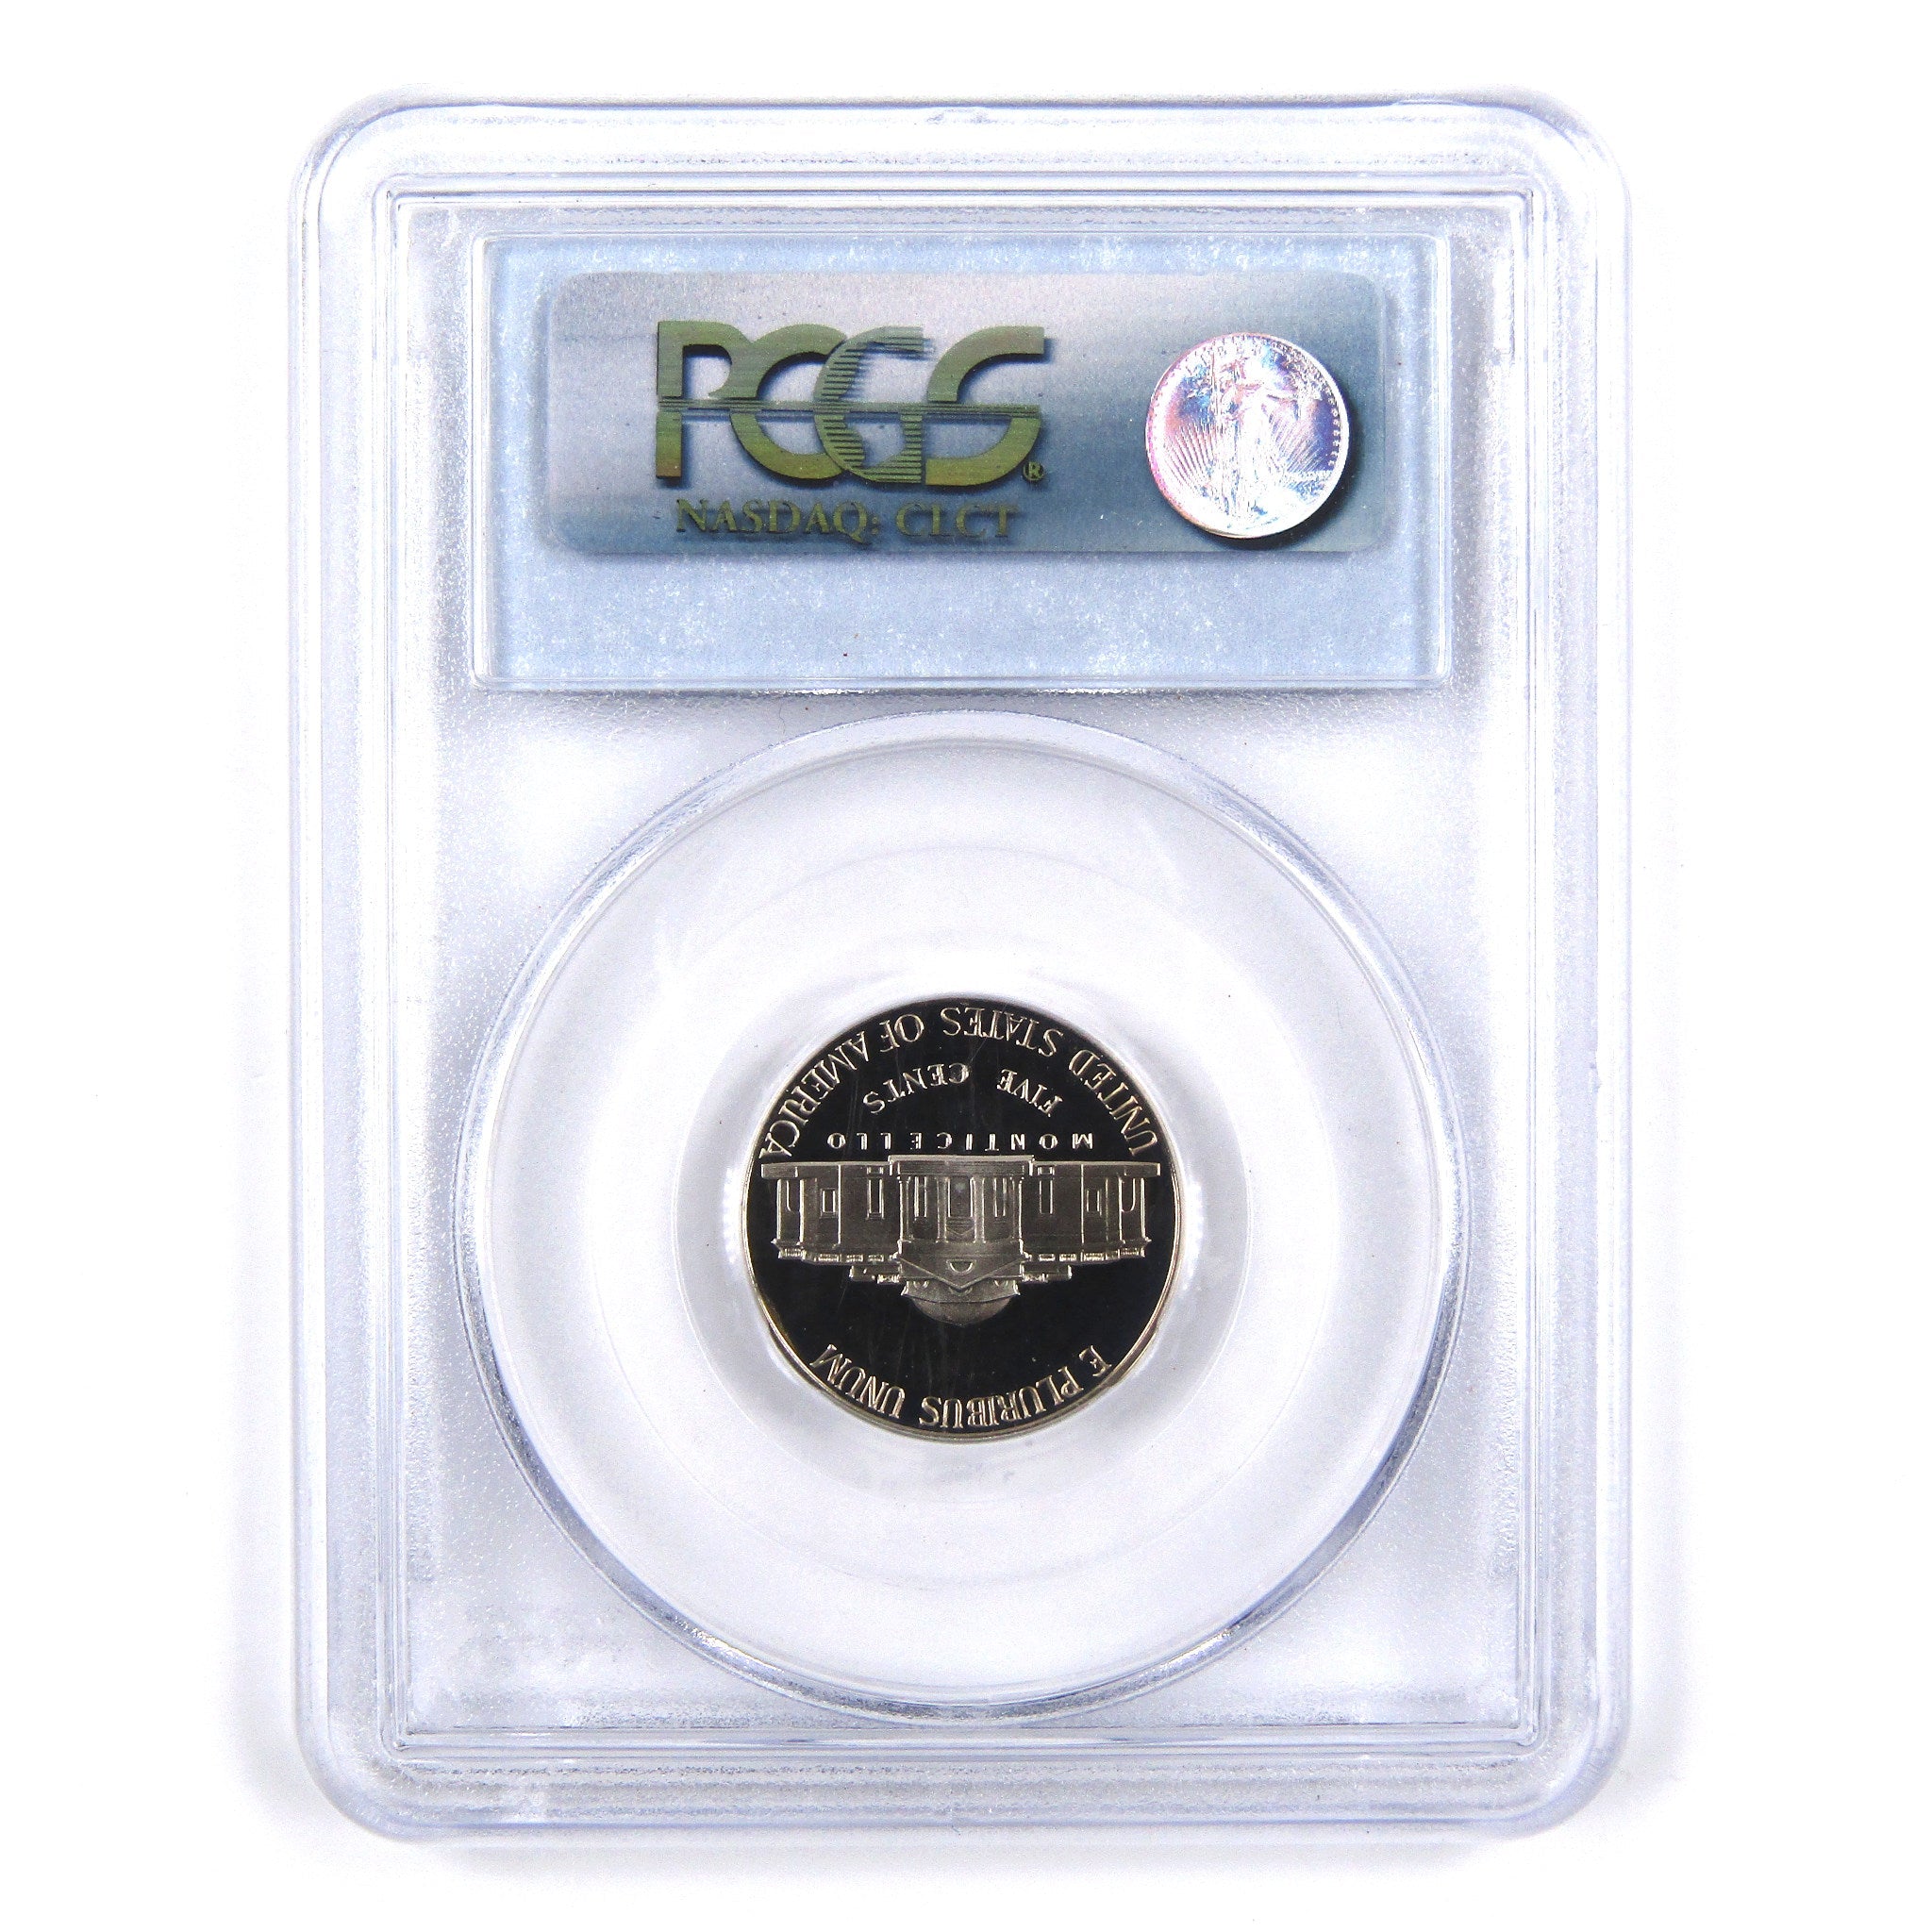 1991 S Jefferson Nickel 5 Cent Piece PR 69 DCAM PCGS Proof SKU:CPC2379